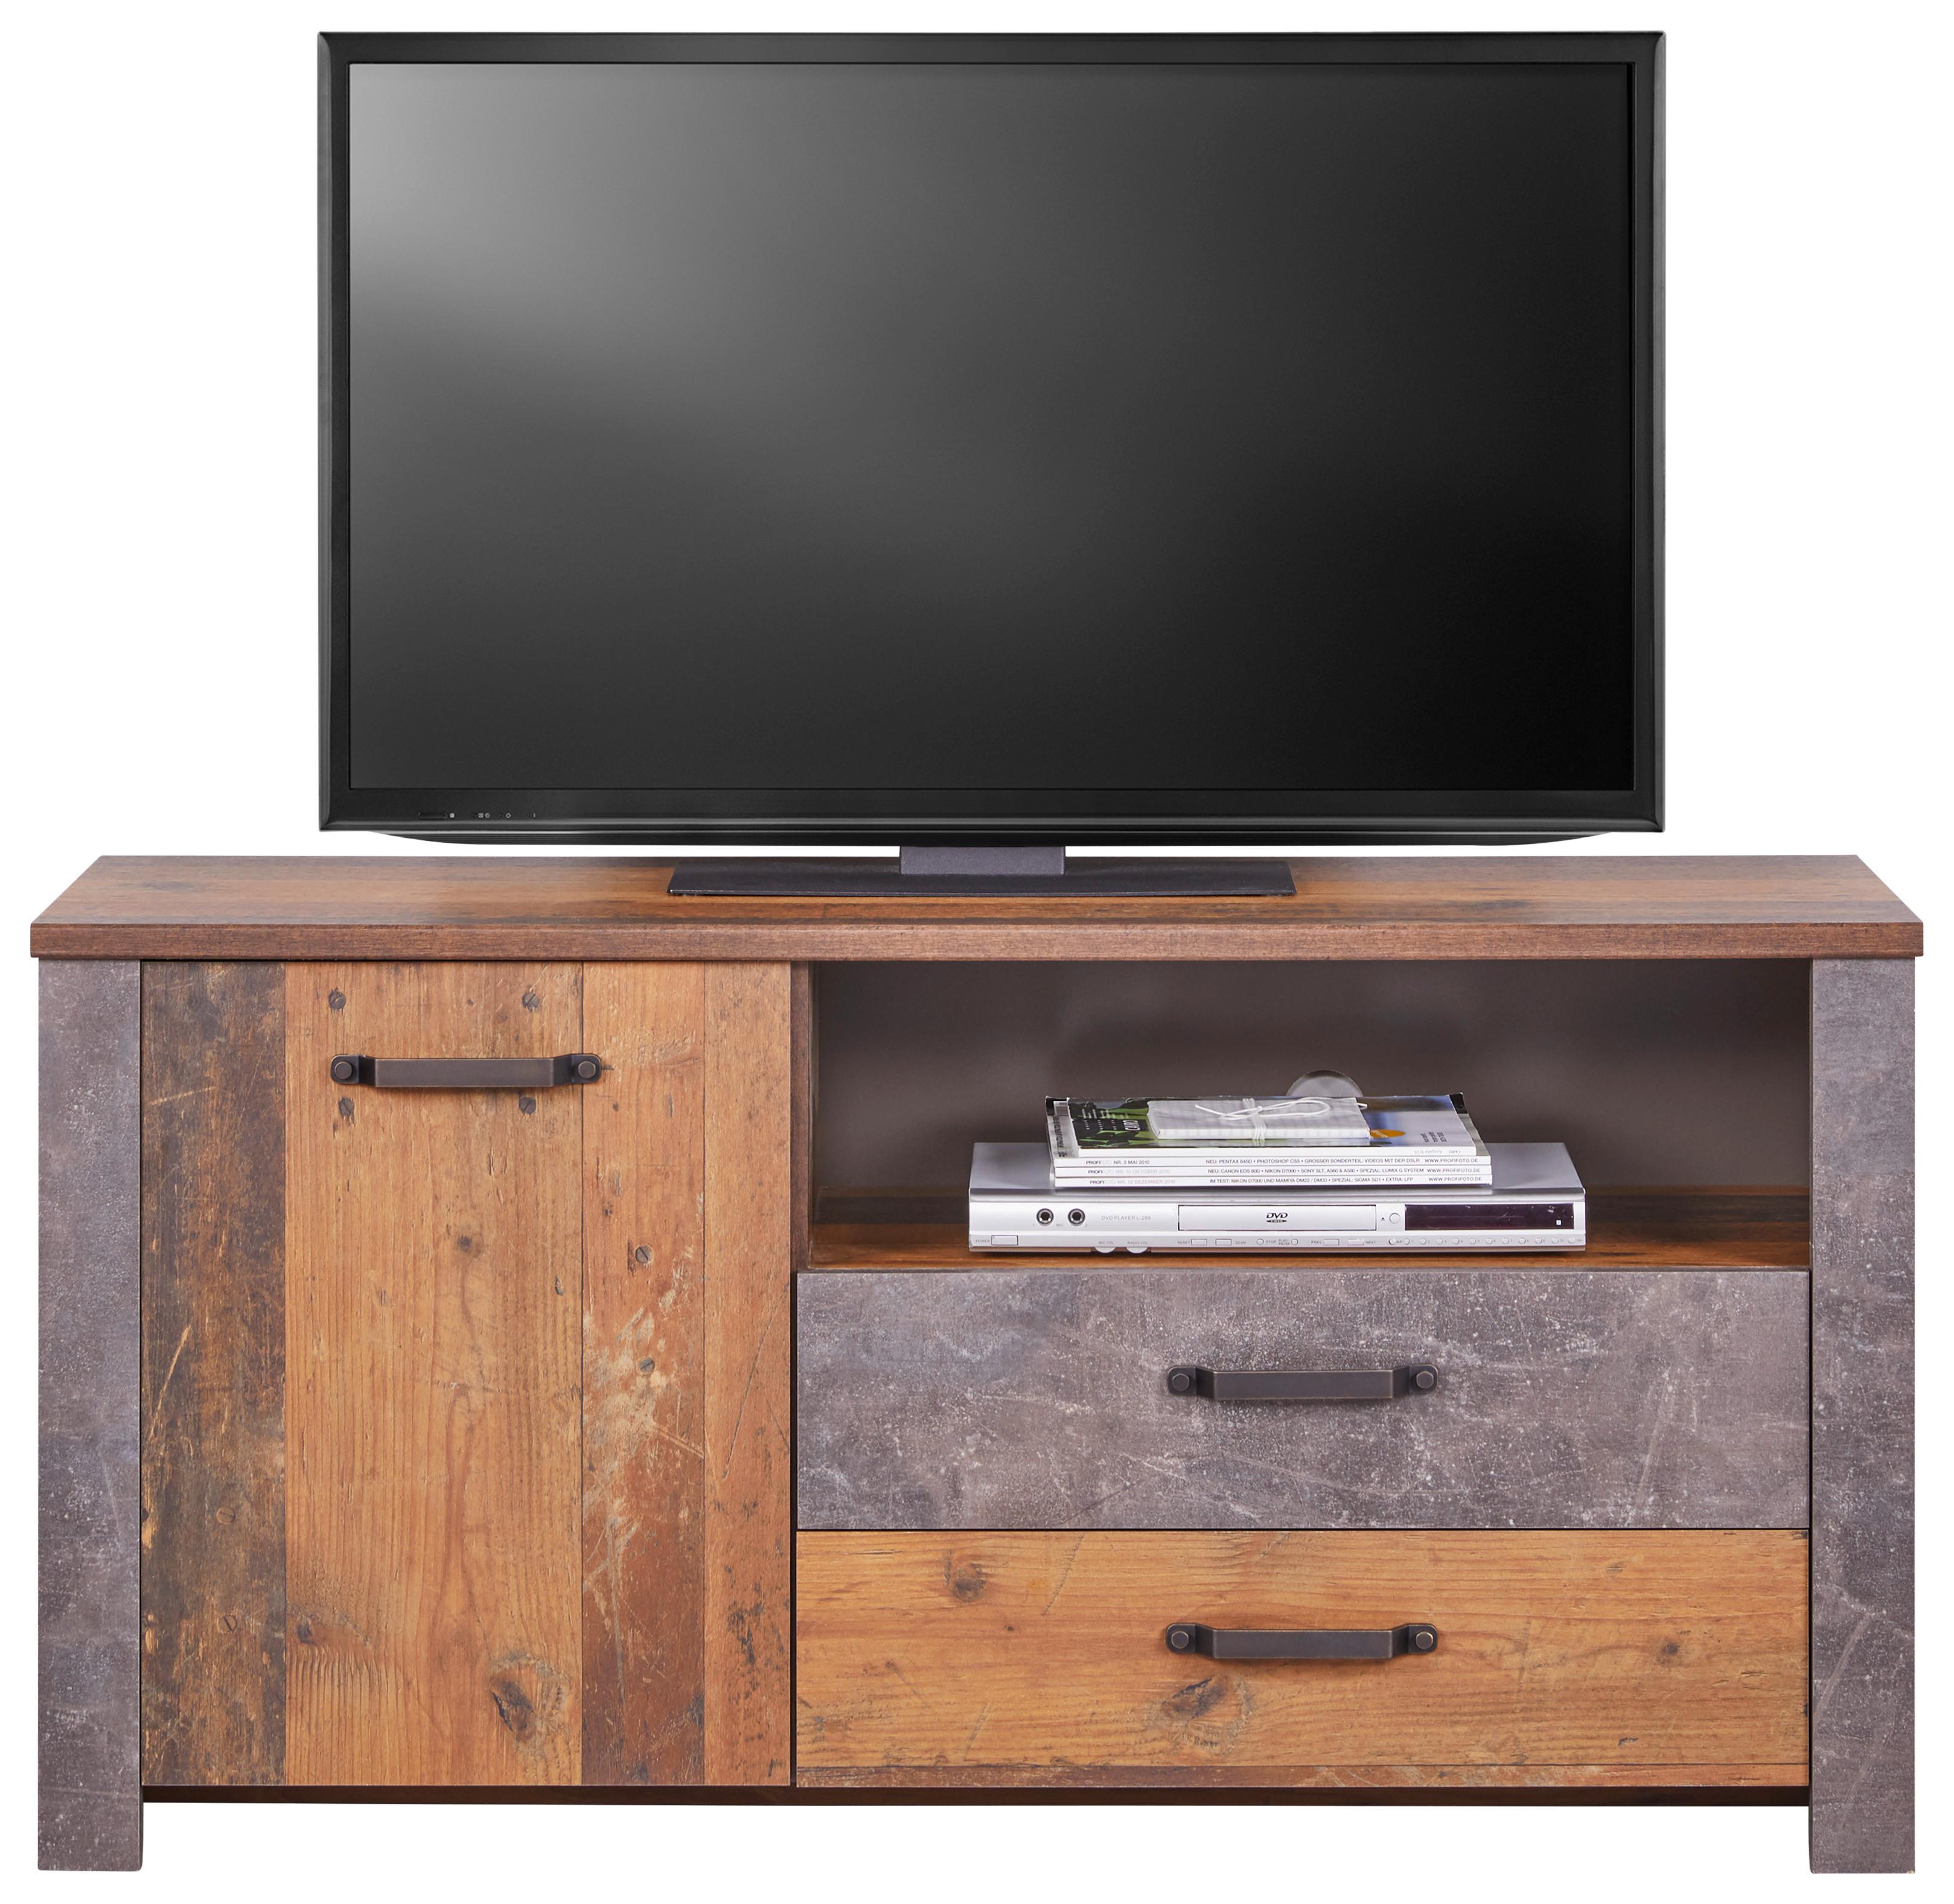 Komoda Pod Televizi Ontario - barvy dubu/černá, Trend, kompozitní dřevo/plast (131/67,7/41,5cm) - Ondega